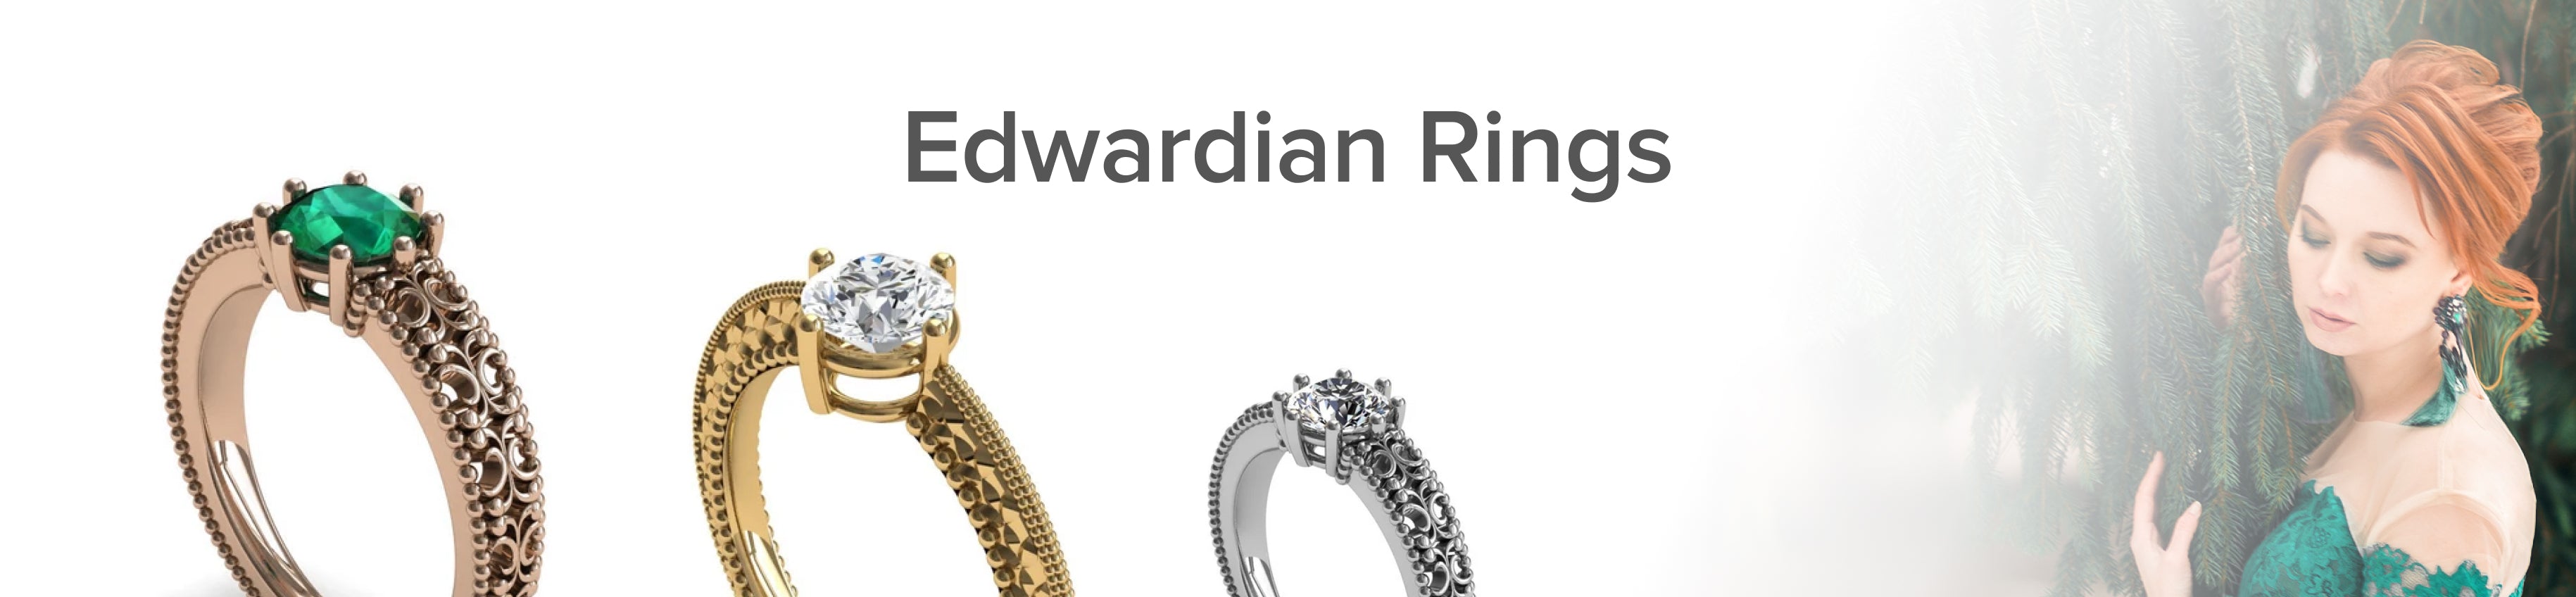 Edwardian Engagement Rings Banner